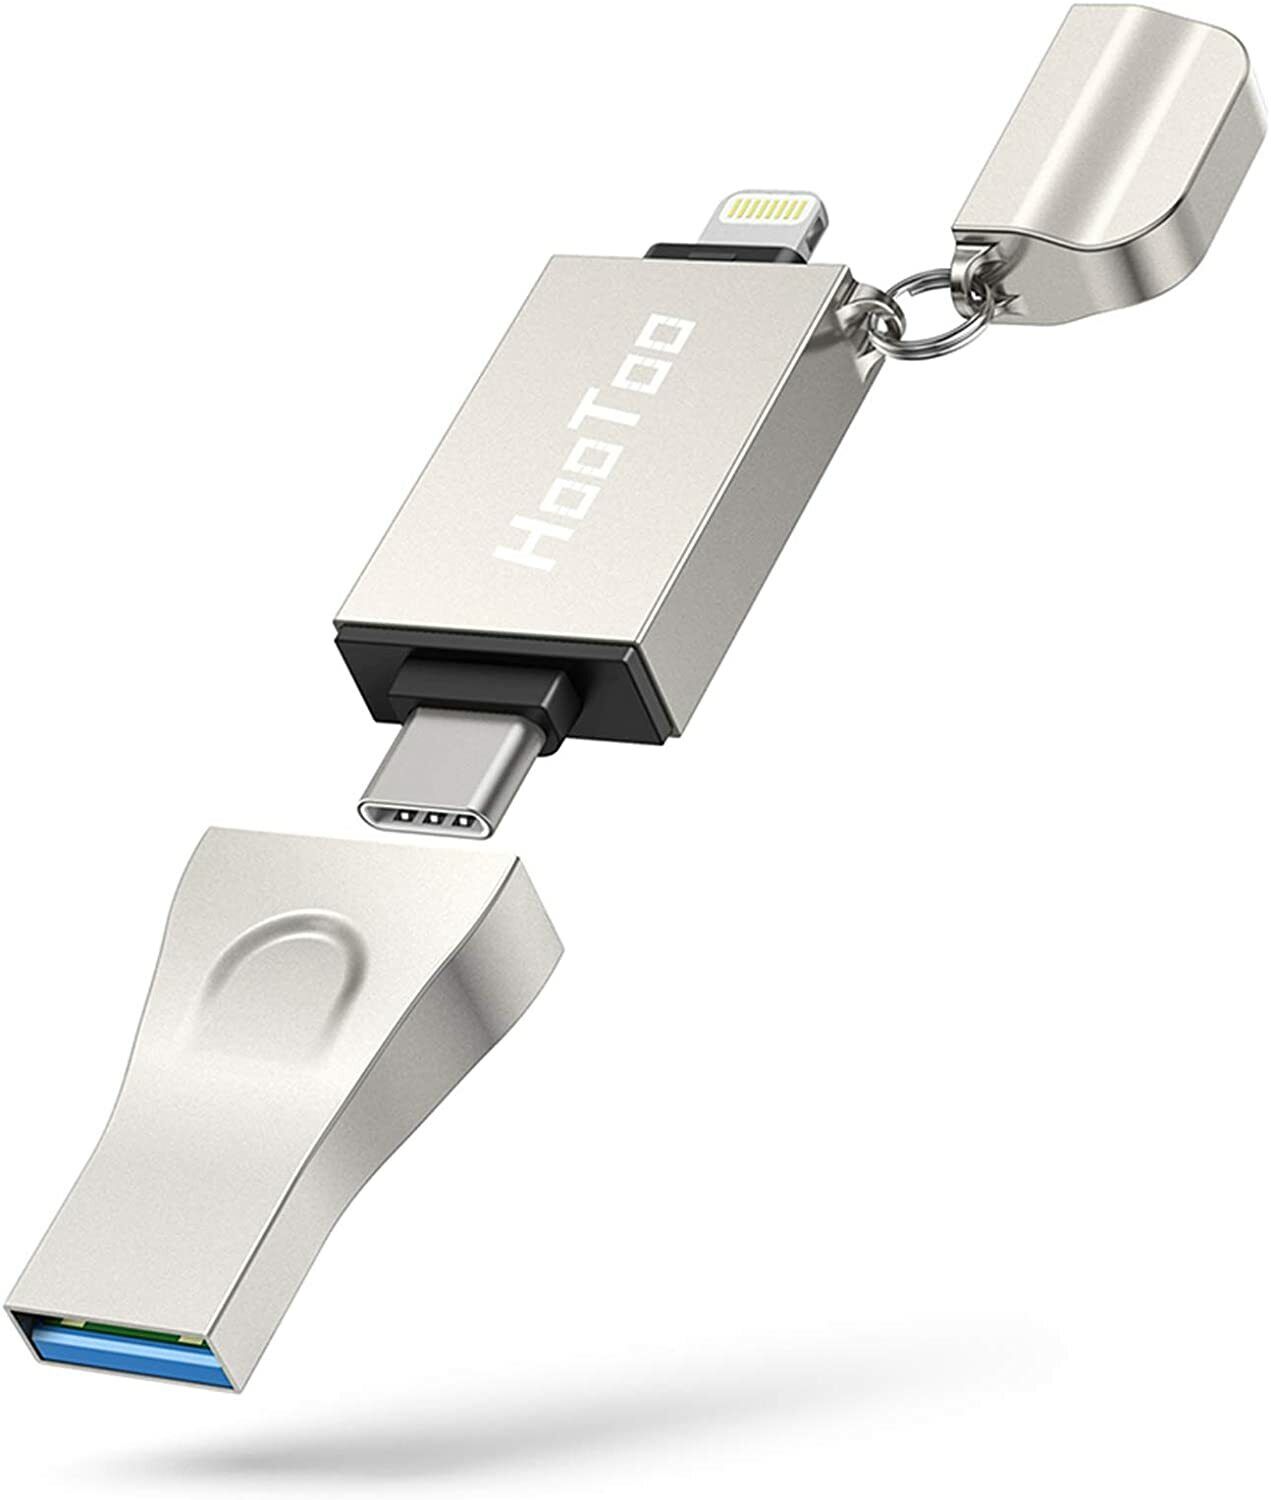 HooToo iPhone Flash Drive 3 in 1 Type C Stick USB 3.1 USB C Flash Drive Memory